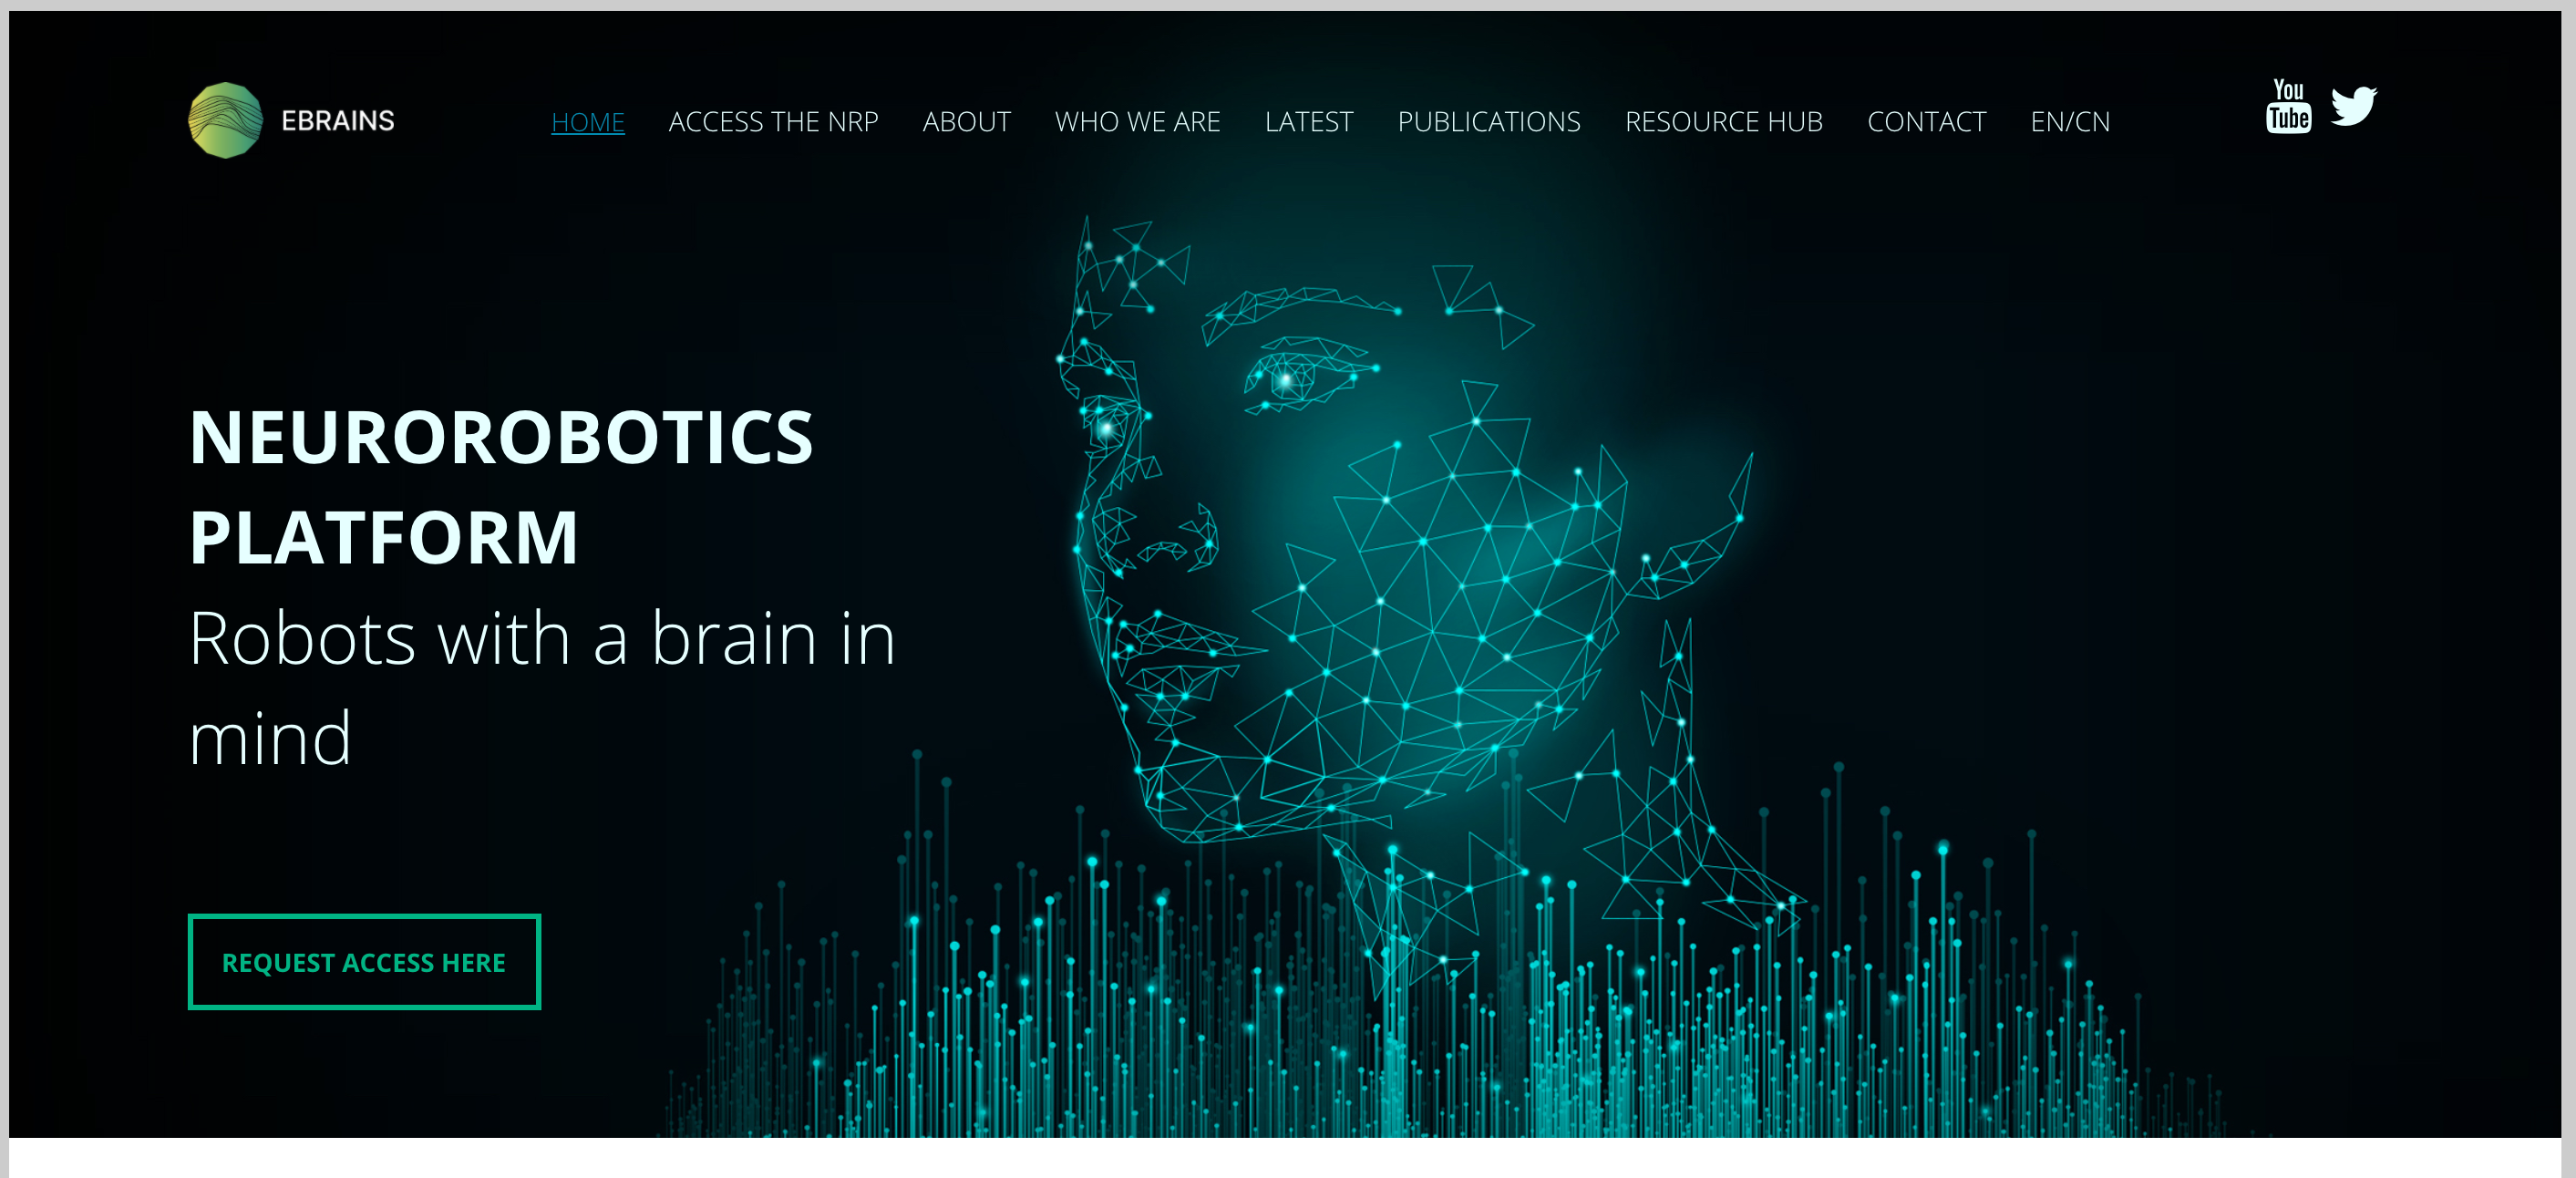 Image of EBRAINS neurorobotics platform